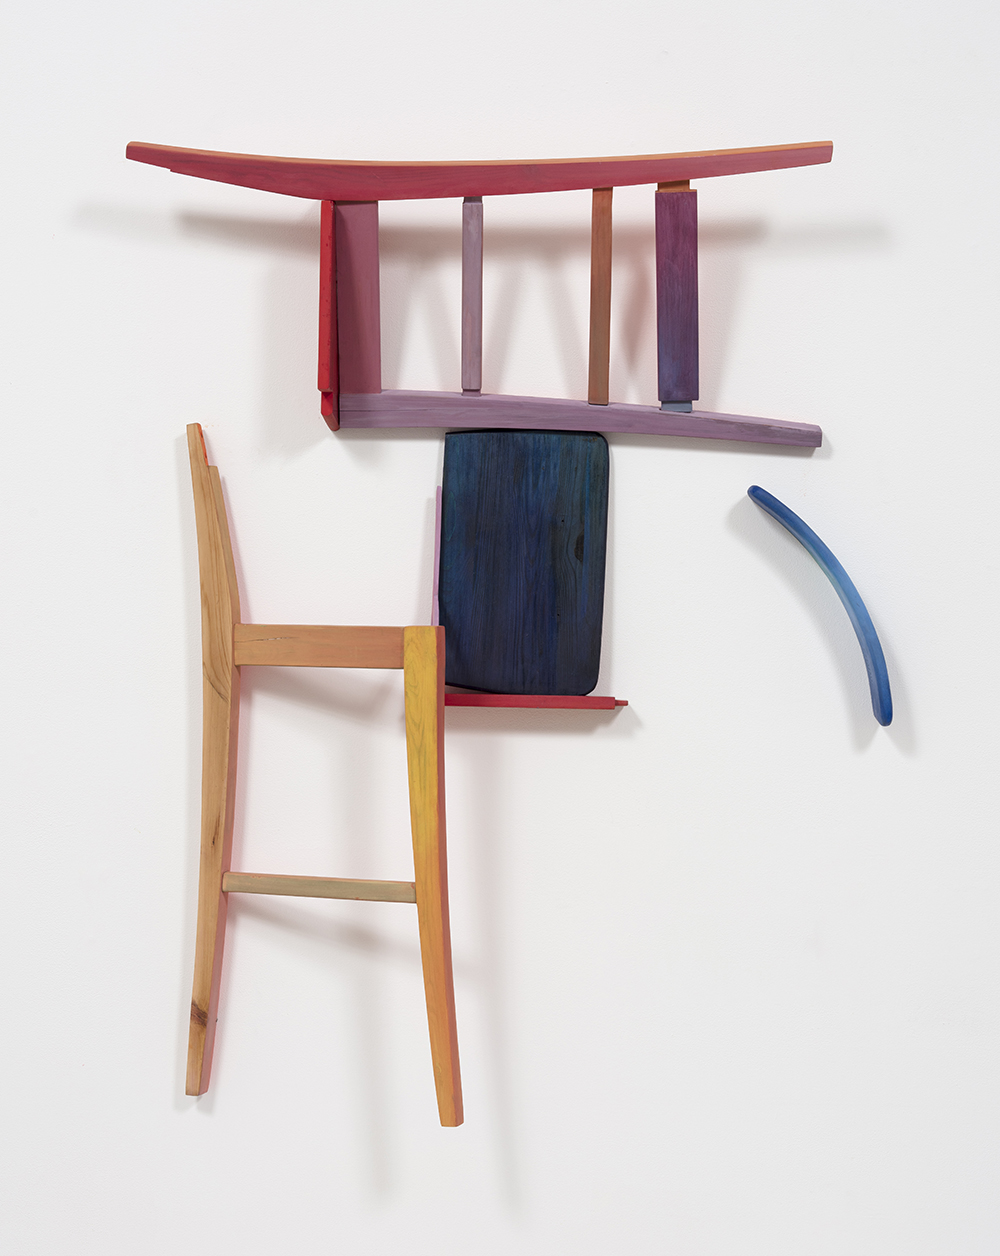 Gabrielle D'Angelo.<em> Chair Piece</em>, 2019. Wood, milk and flash paint, dye, varnish, 56 x 42 x 8 inches (142.2 x 106.7 x 20.3 cm)